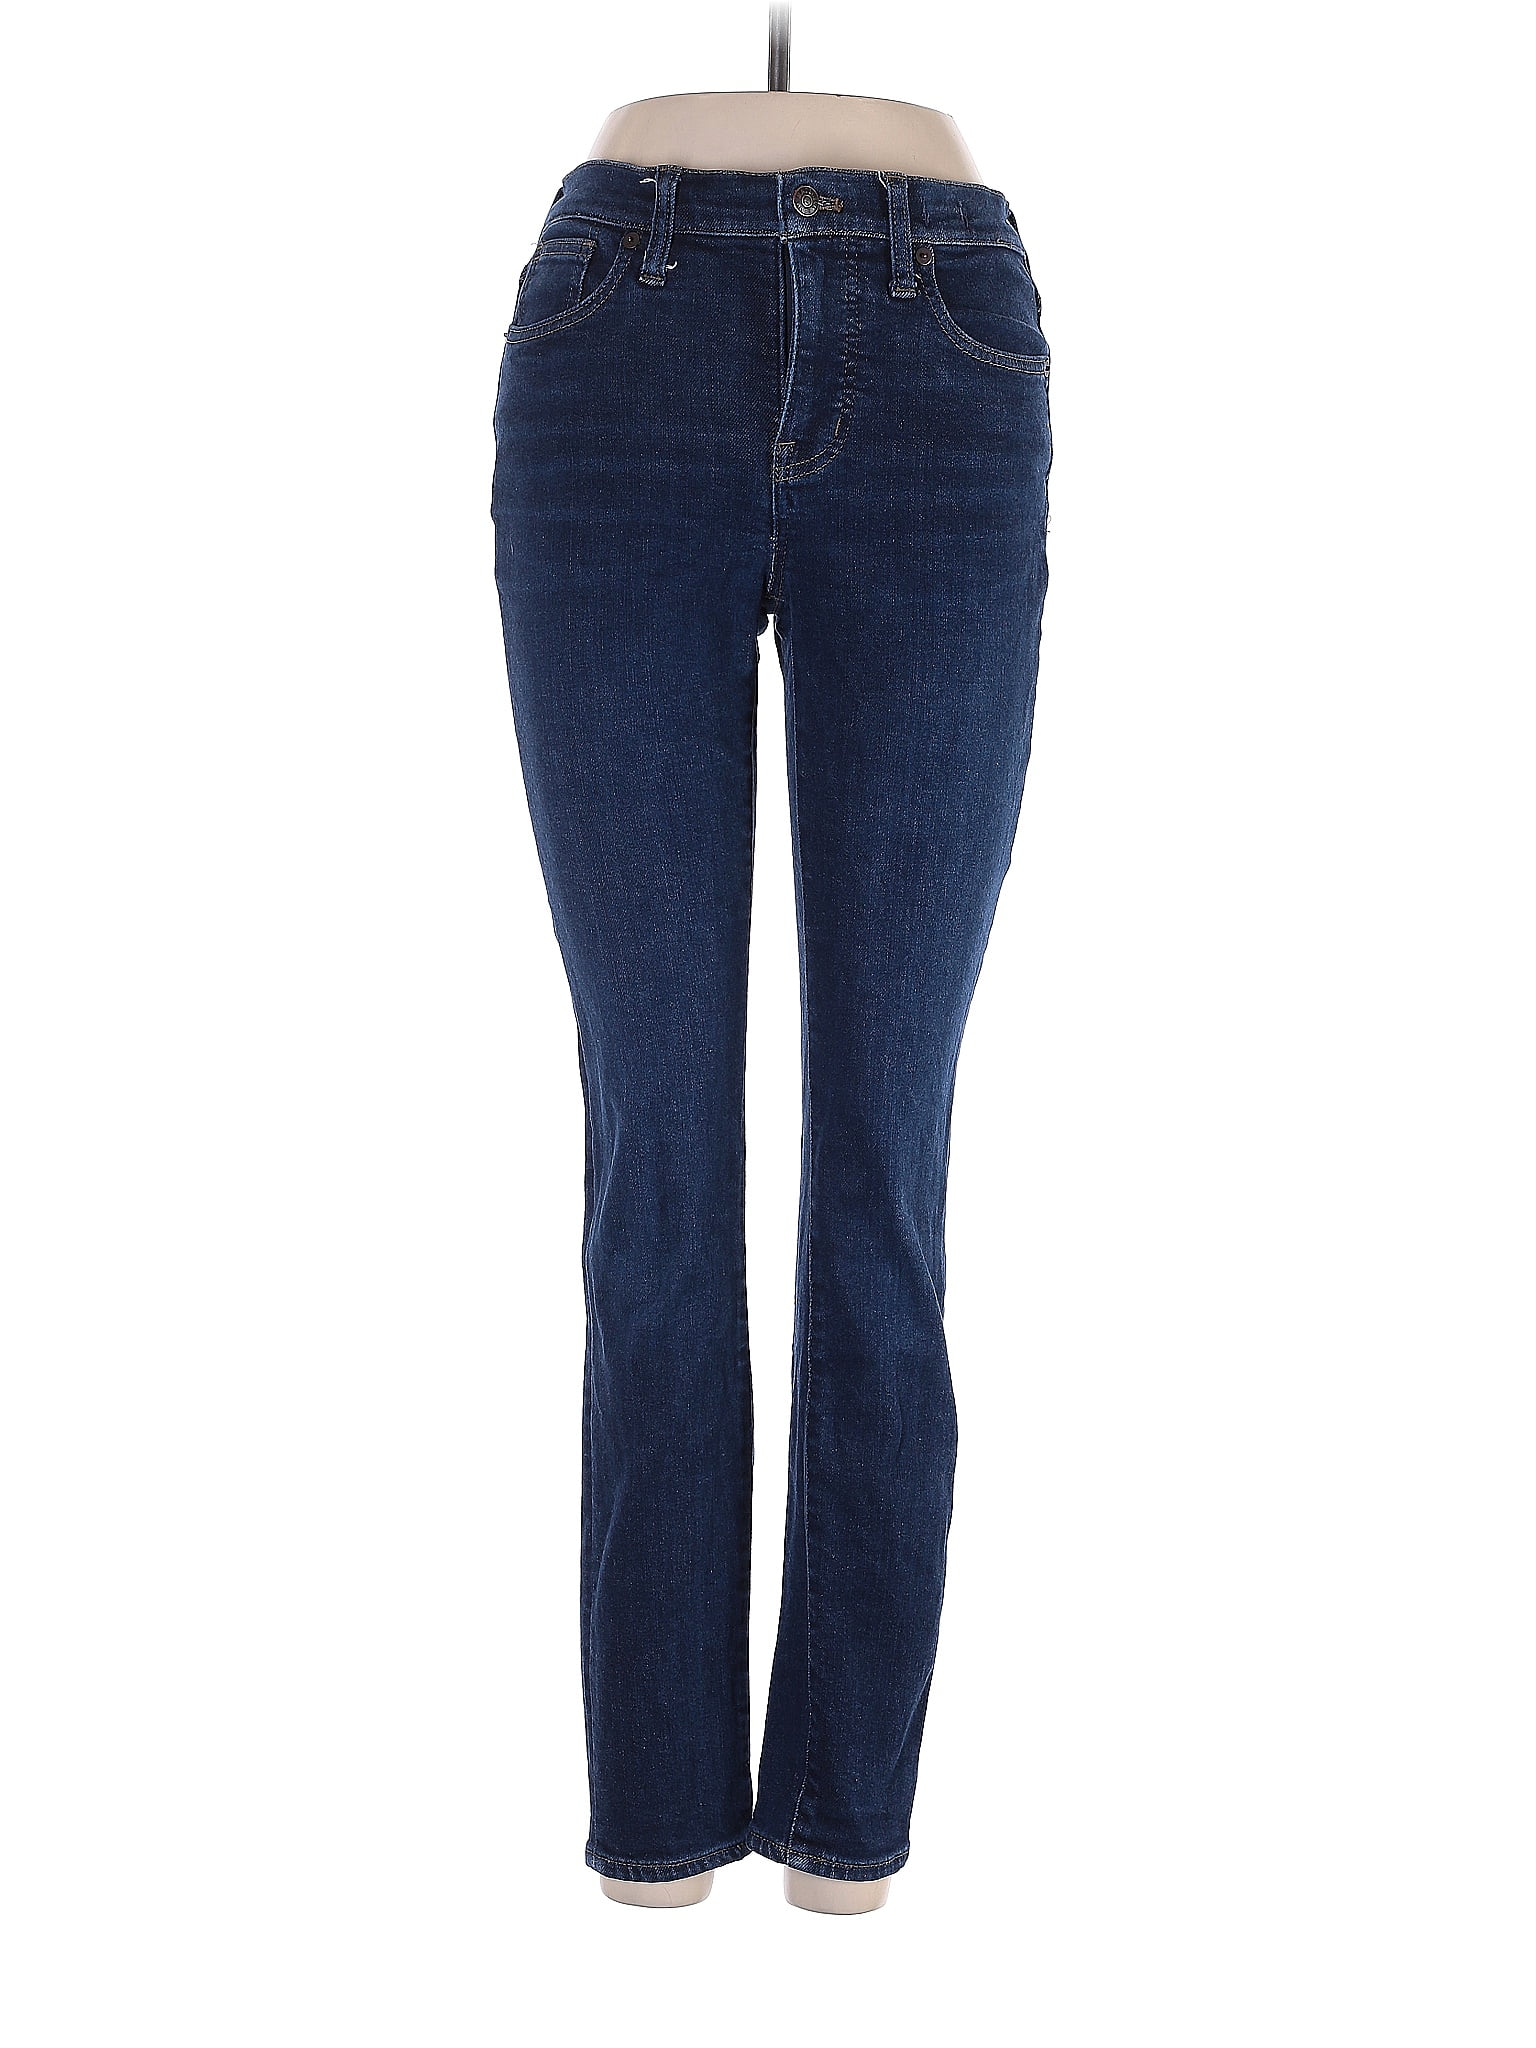 Madewell Tortoise Blue Jeans 26 Waist - 69% off | ThredUp